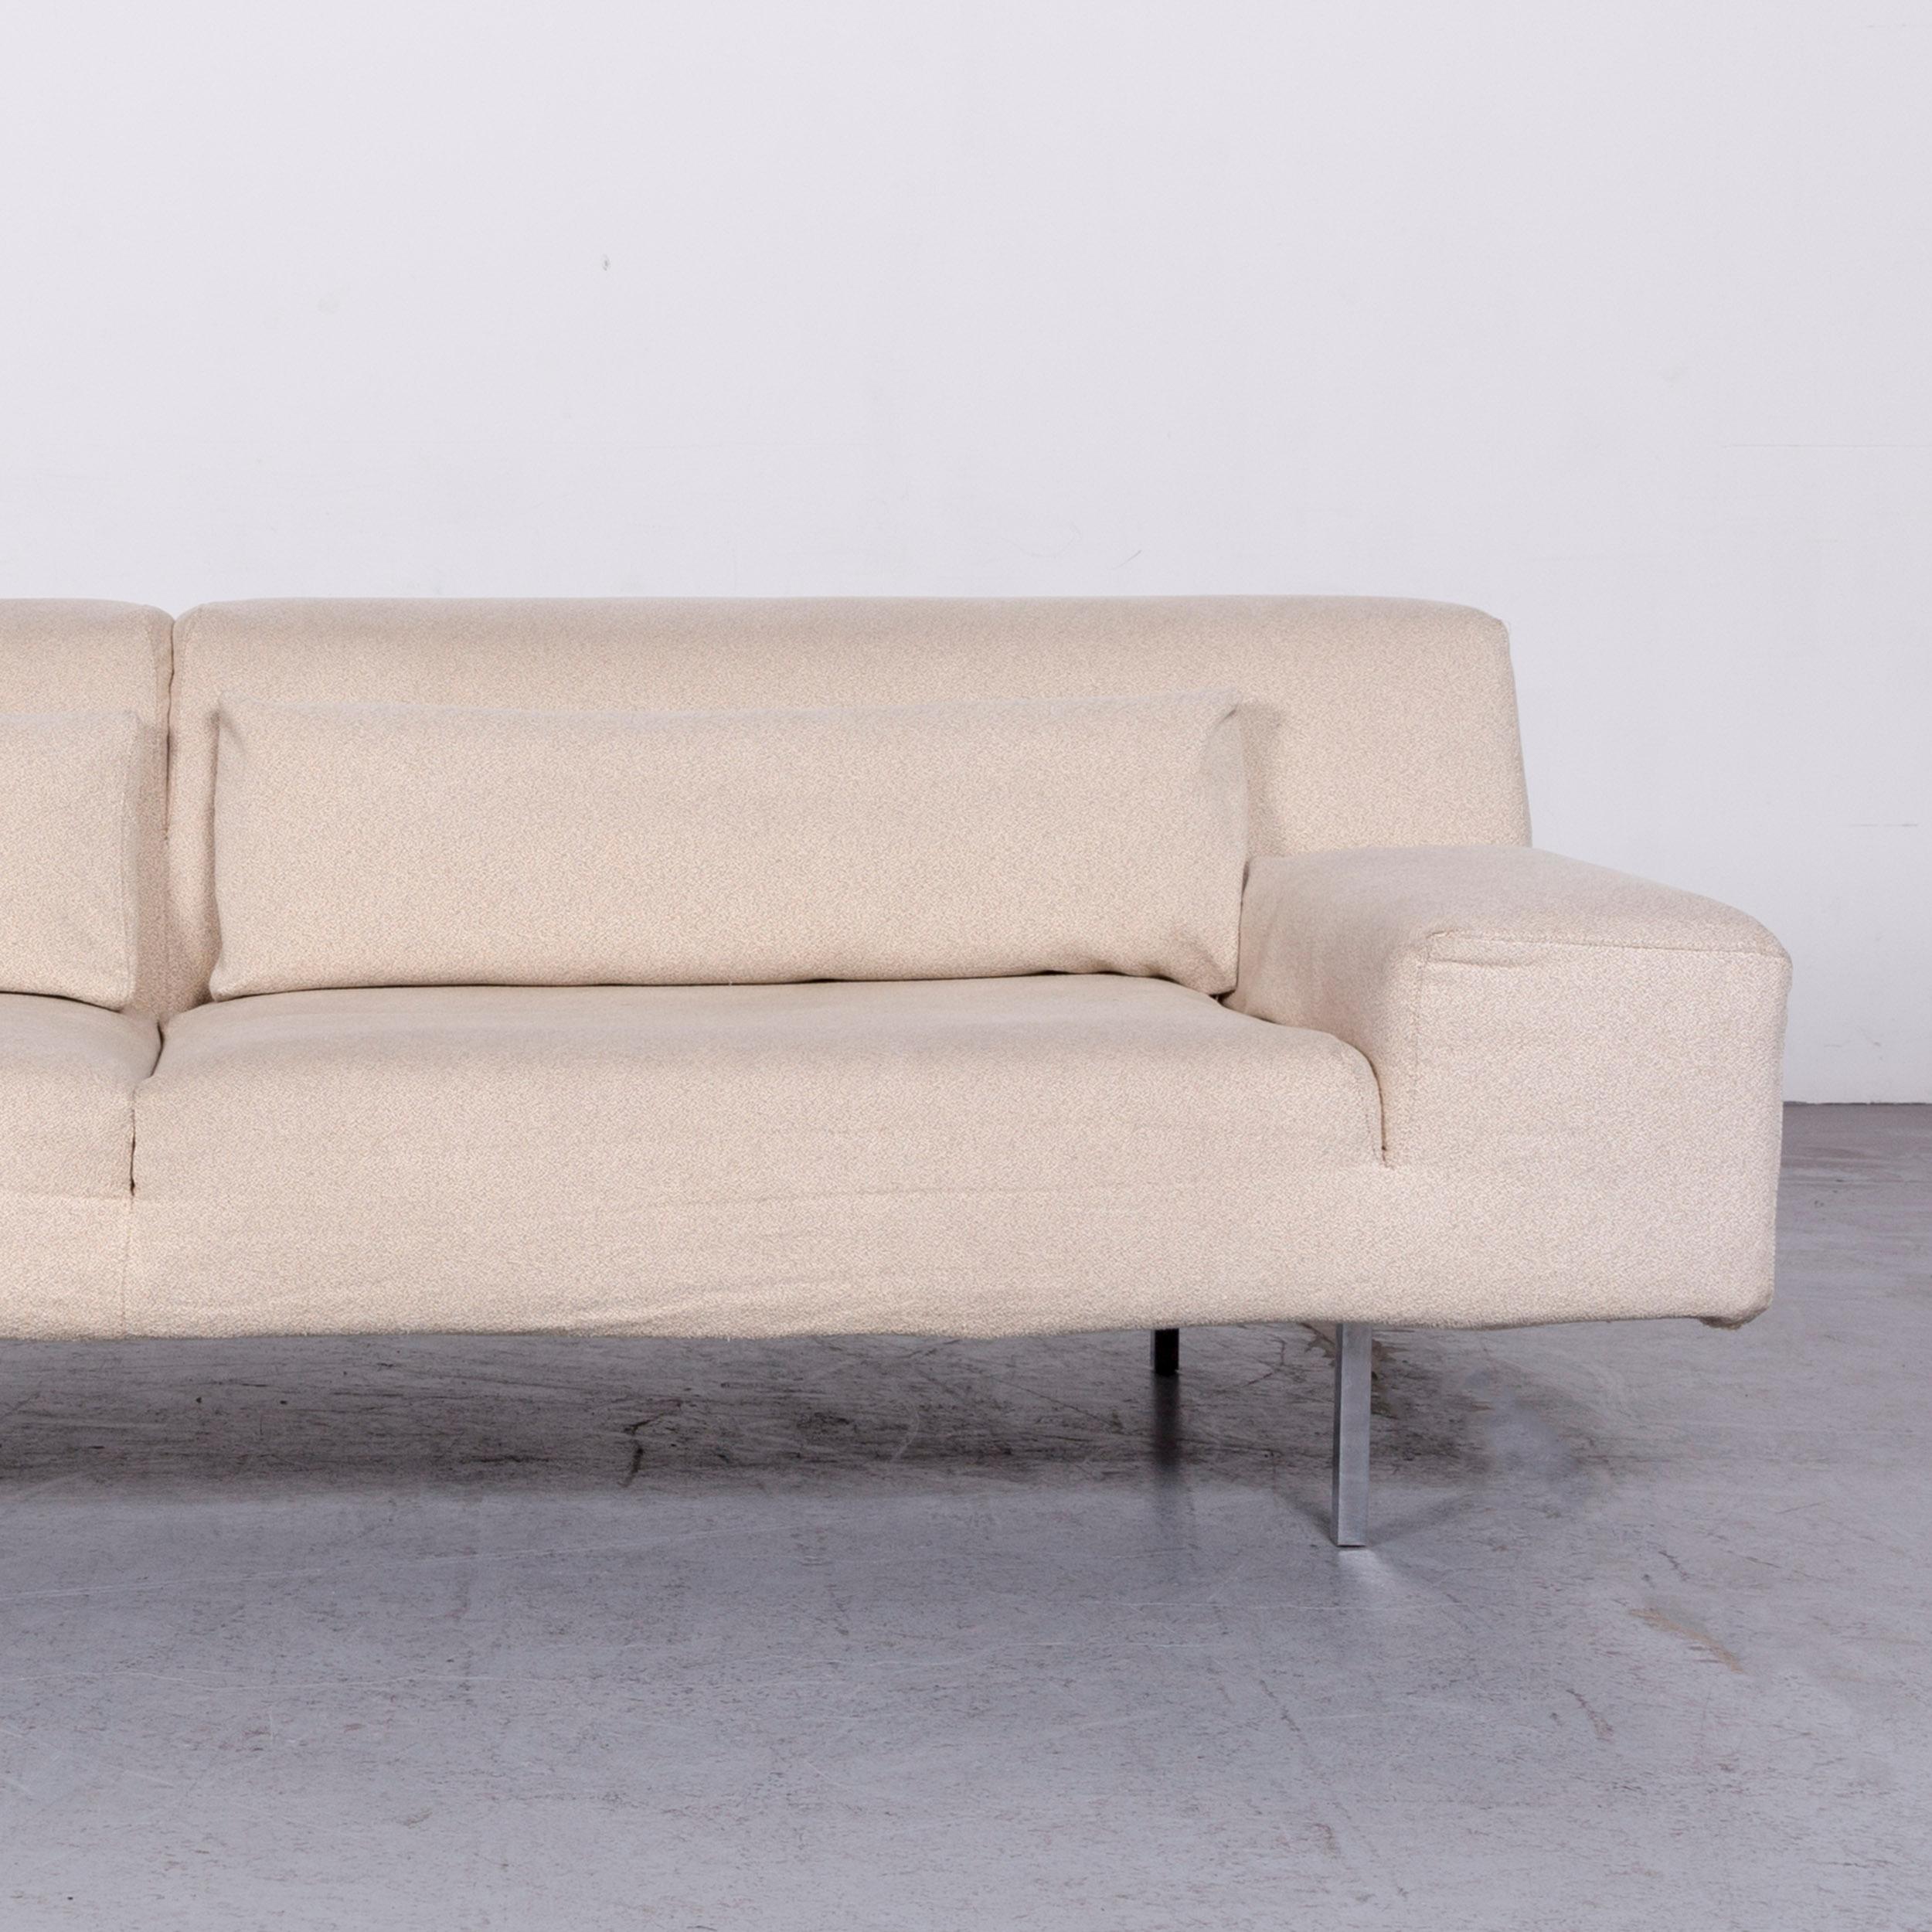 Molteni Designer Fabric Sofa Footstool Set Crème Three-Seat Couch In Good Condition For Sale In Cologne, DE